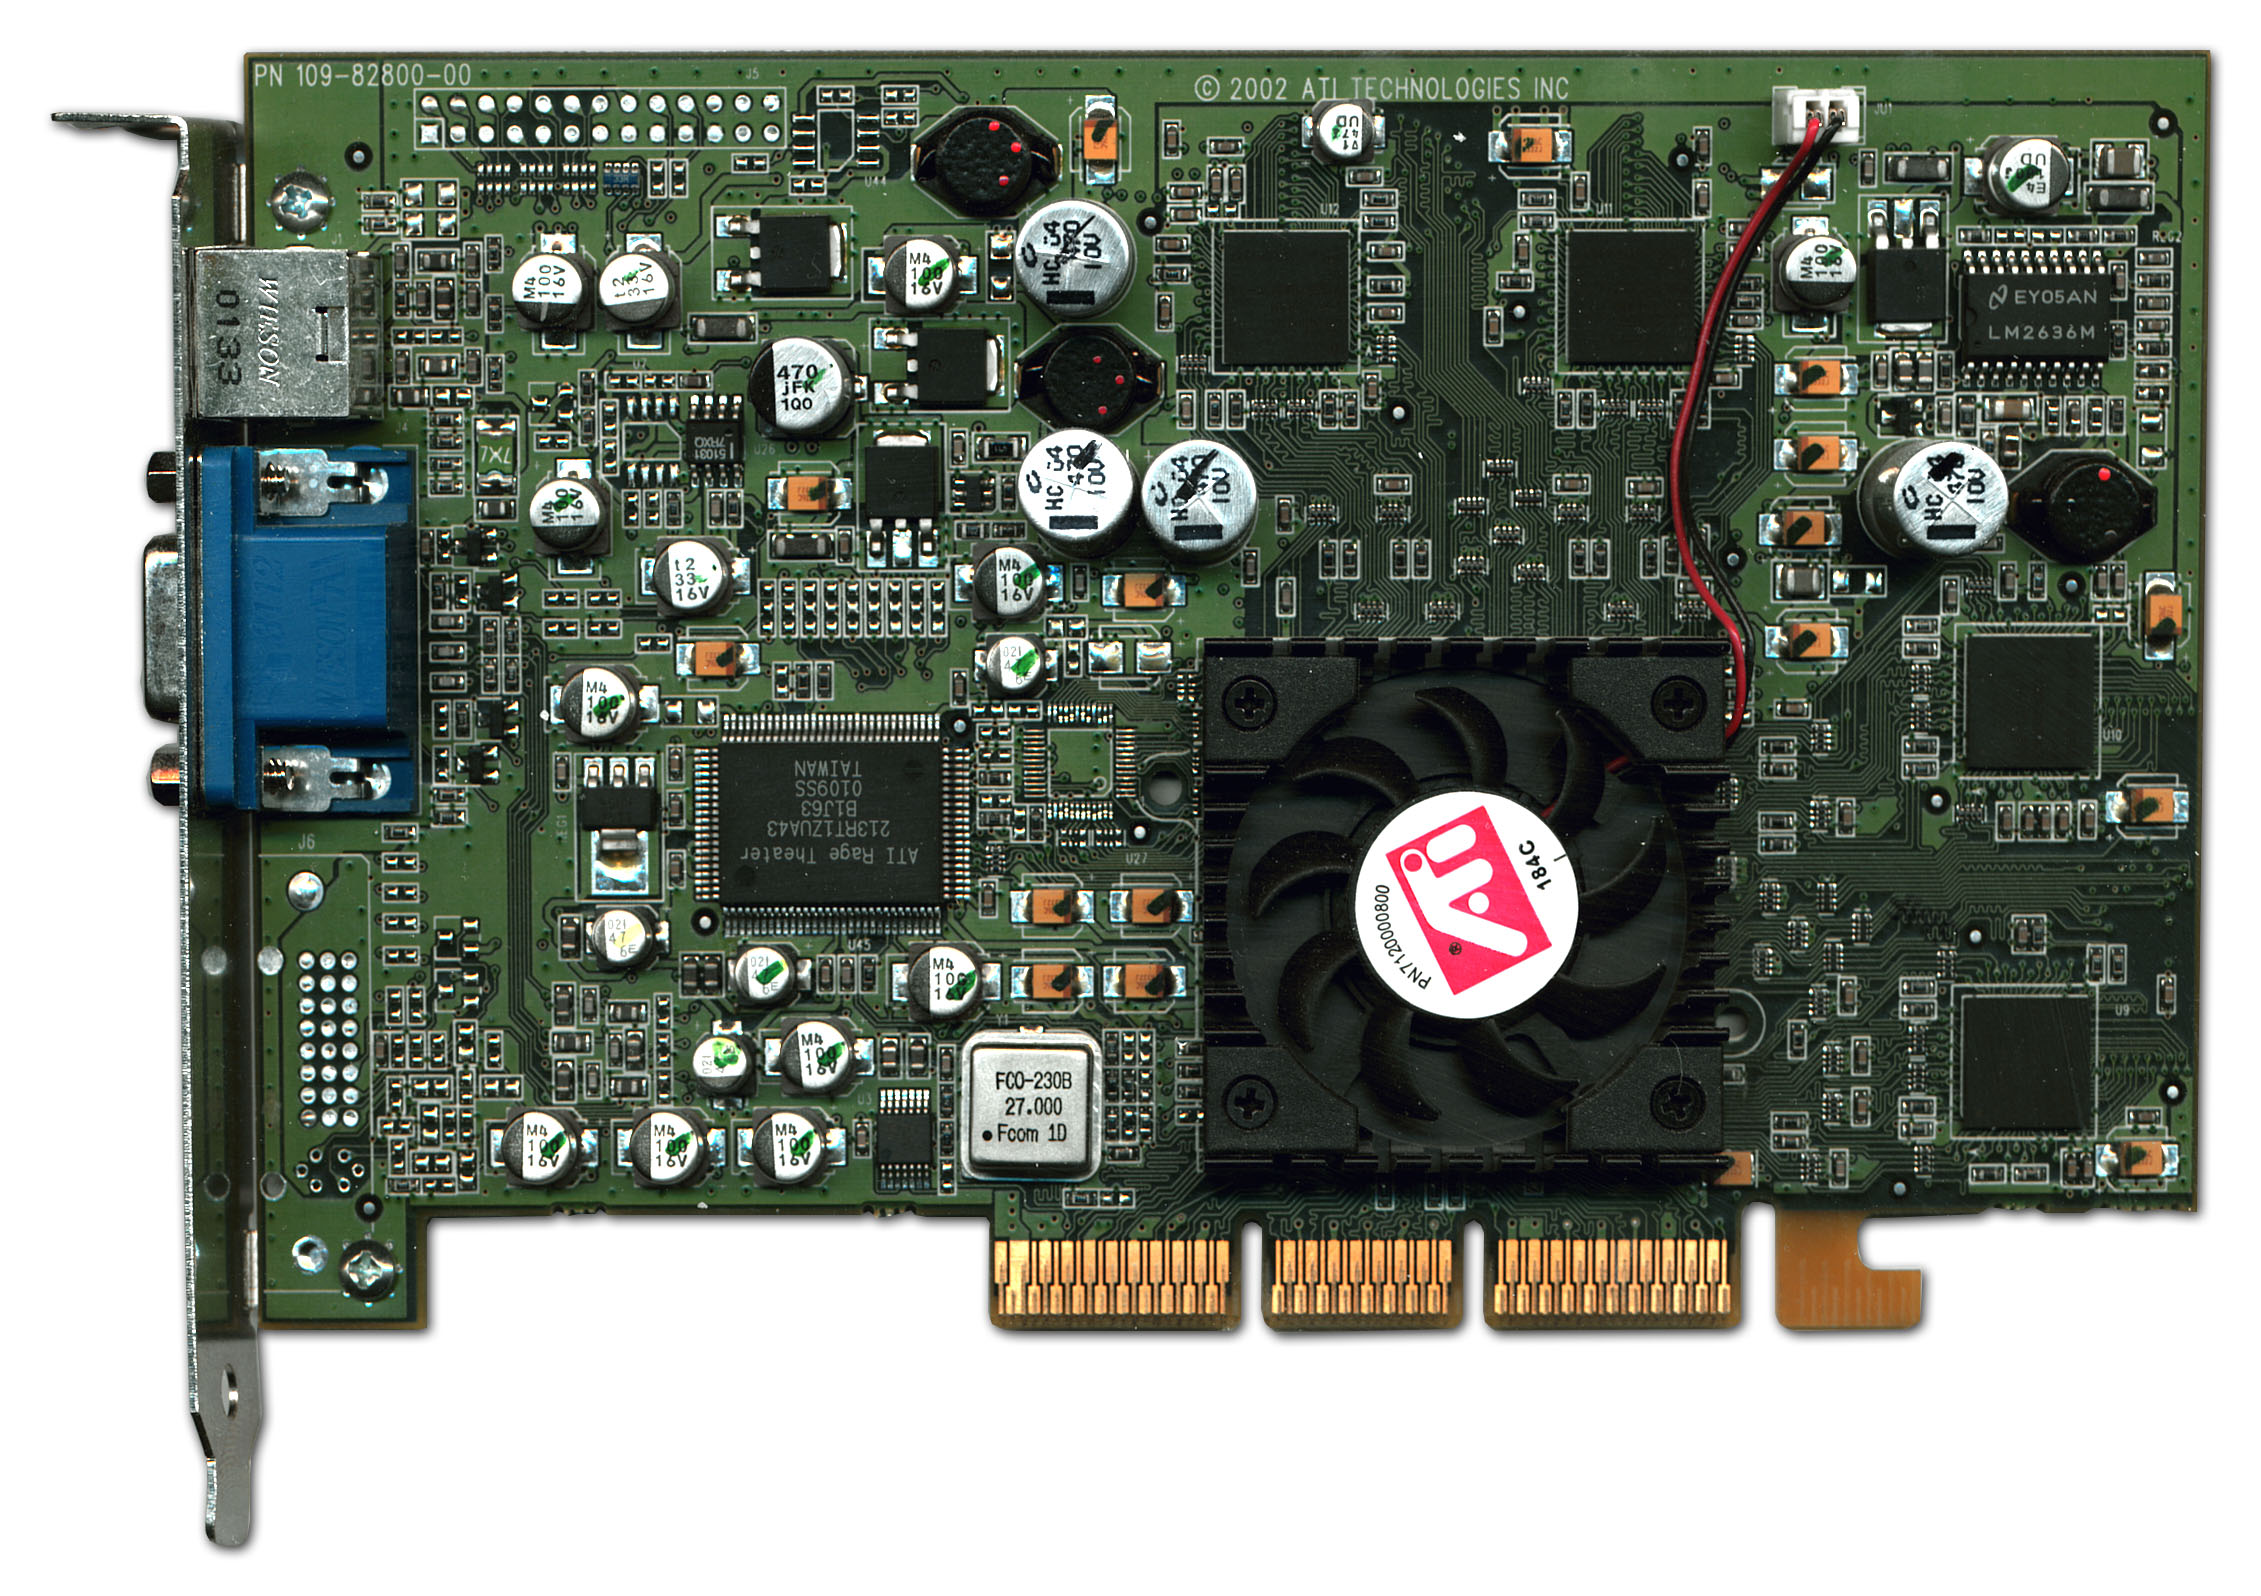 ATI Radeon 9600 Pro 128mb. Radeon 9500 Pro. Sapphire Radeon 9600. Radeon x1300 128mb.